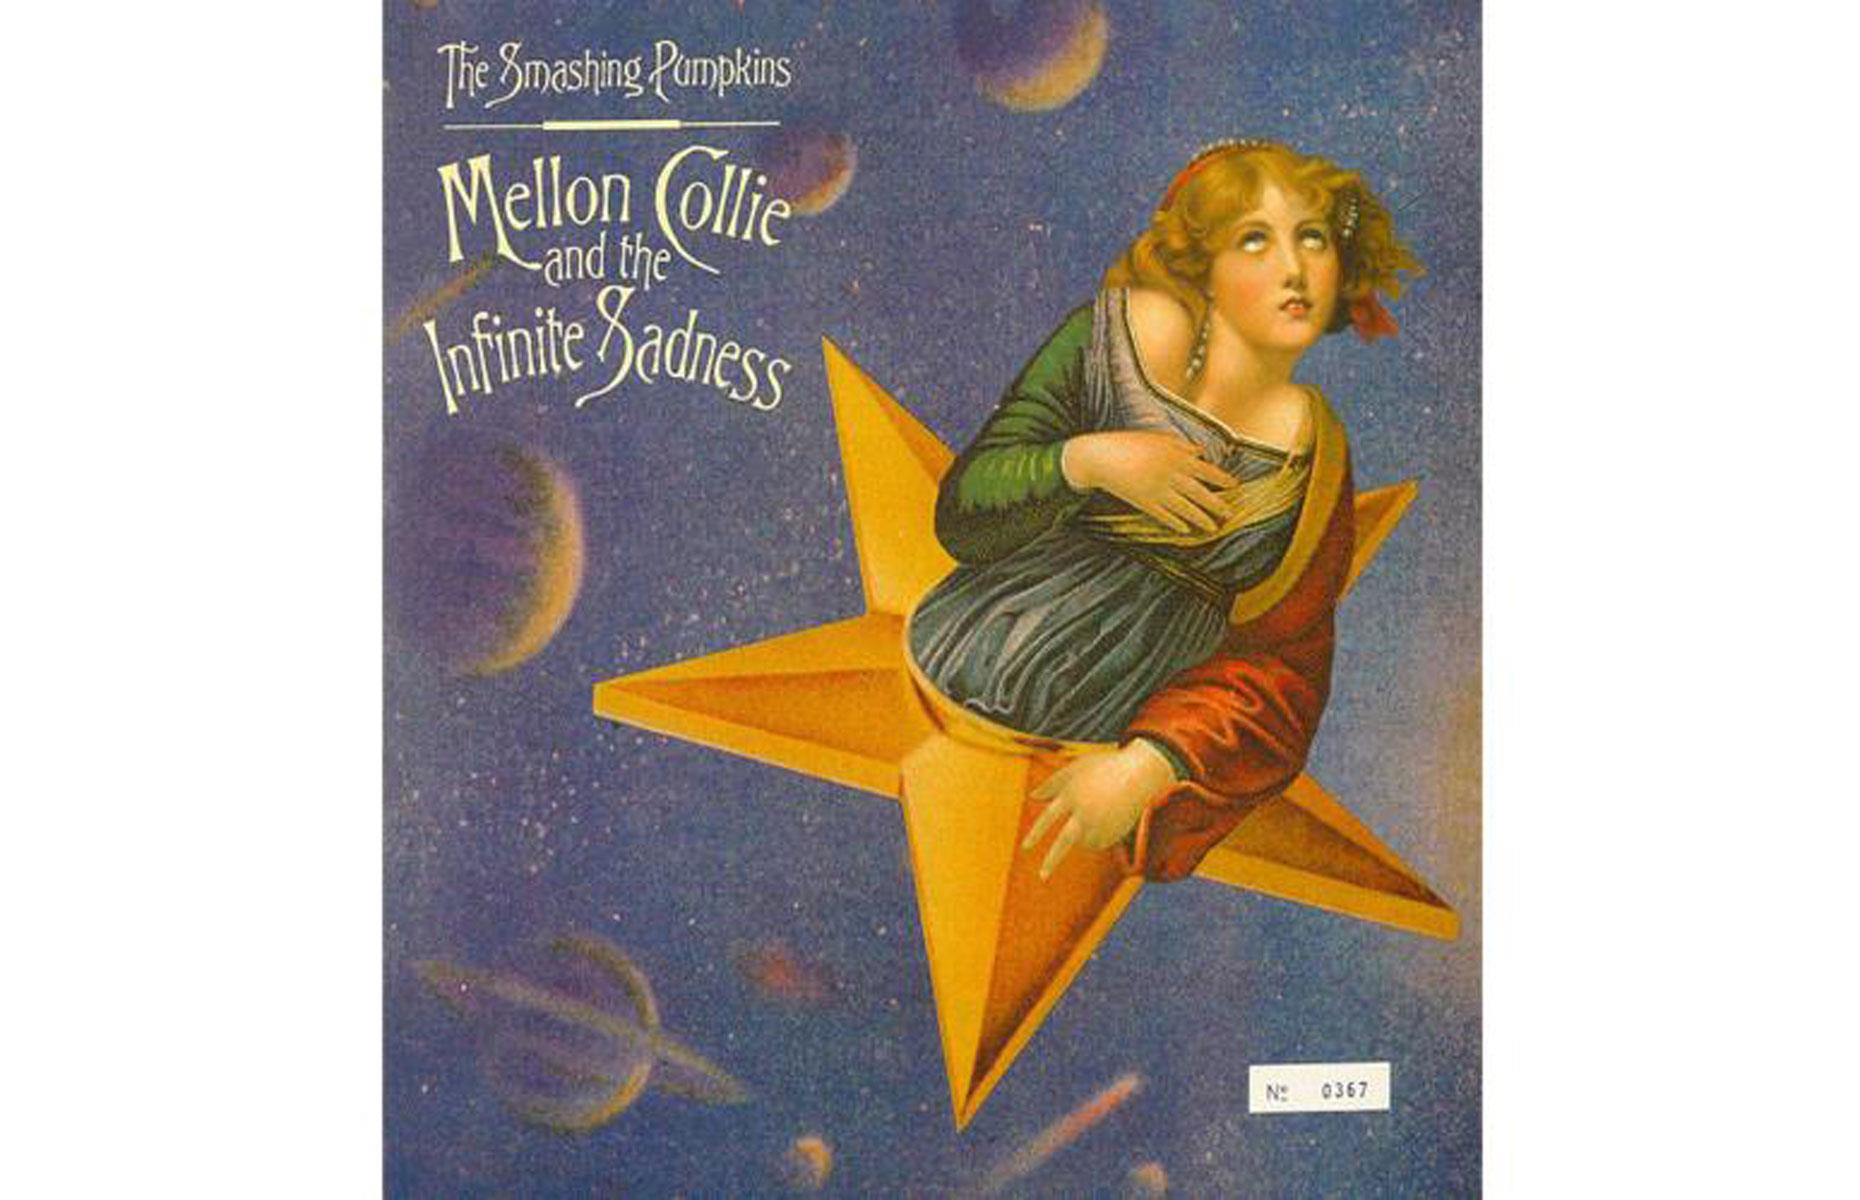 Smashing Pumpkins' Mellon Collie And The Infinite Sadness 12” vinyl album UK special edition: $540 (£430)